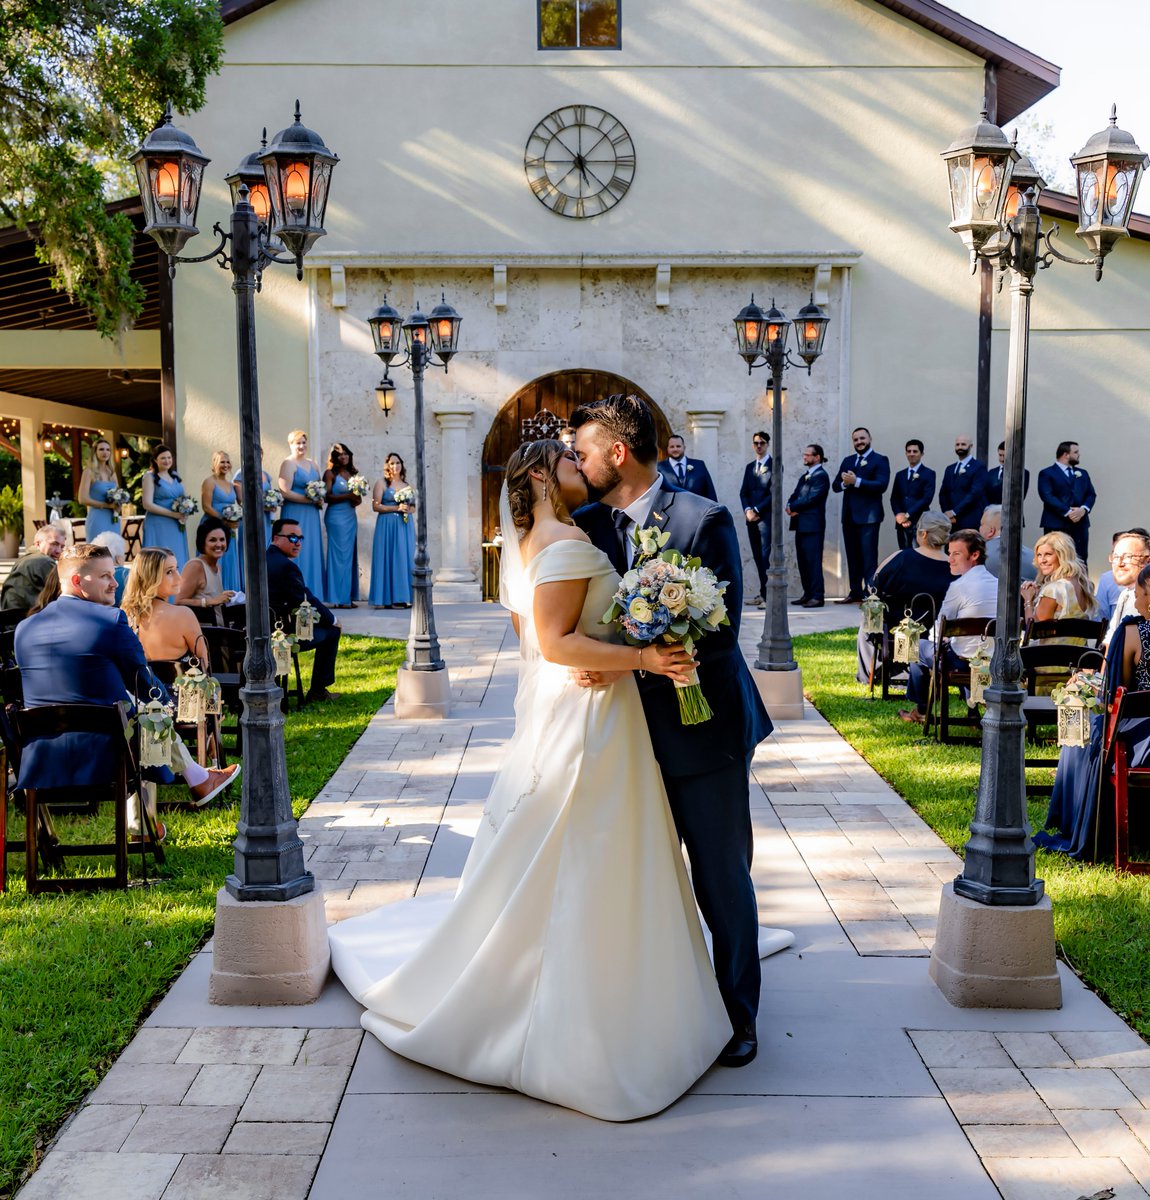 We love a happily ever after. ⛪ 💍
.
.
.
bit.ly/3rjOoZI (941) 776-1460
.
.
.
@BakersRanch #allinclusivevenue #allinclusivewedding #floridaweddingvenue #weddingreception